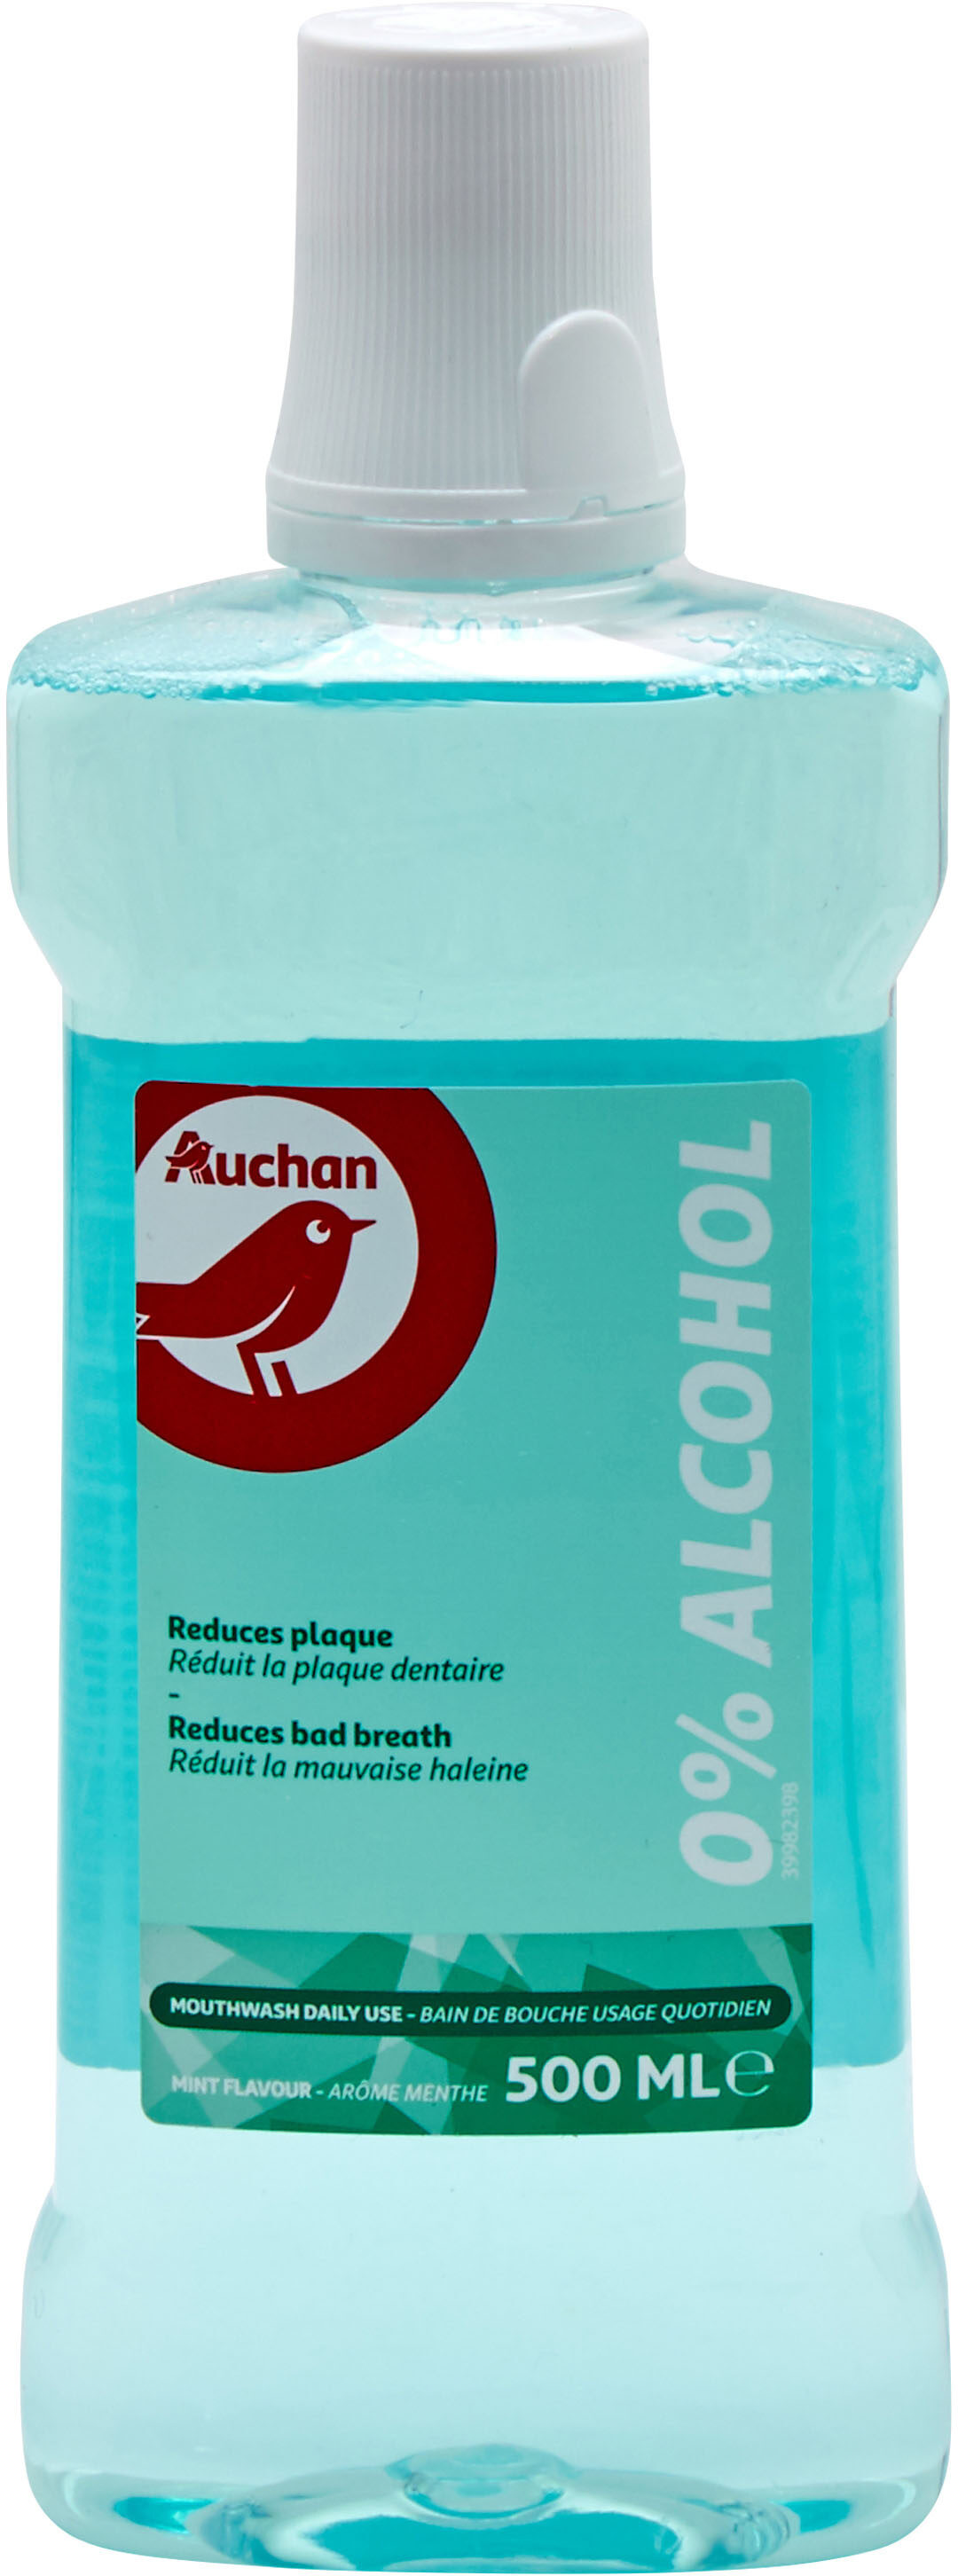 Auchan - bain de bouche - fraicheur 0% alcool - 500ml - Produit - fr